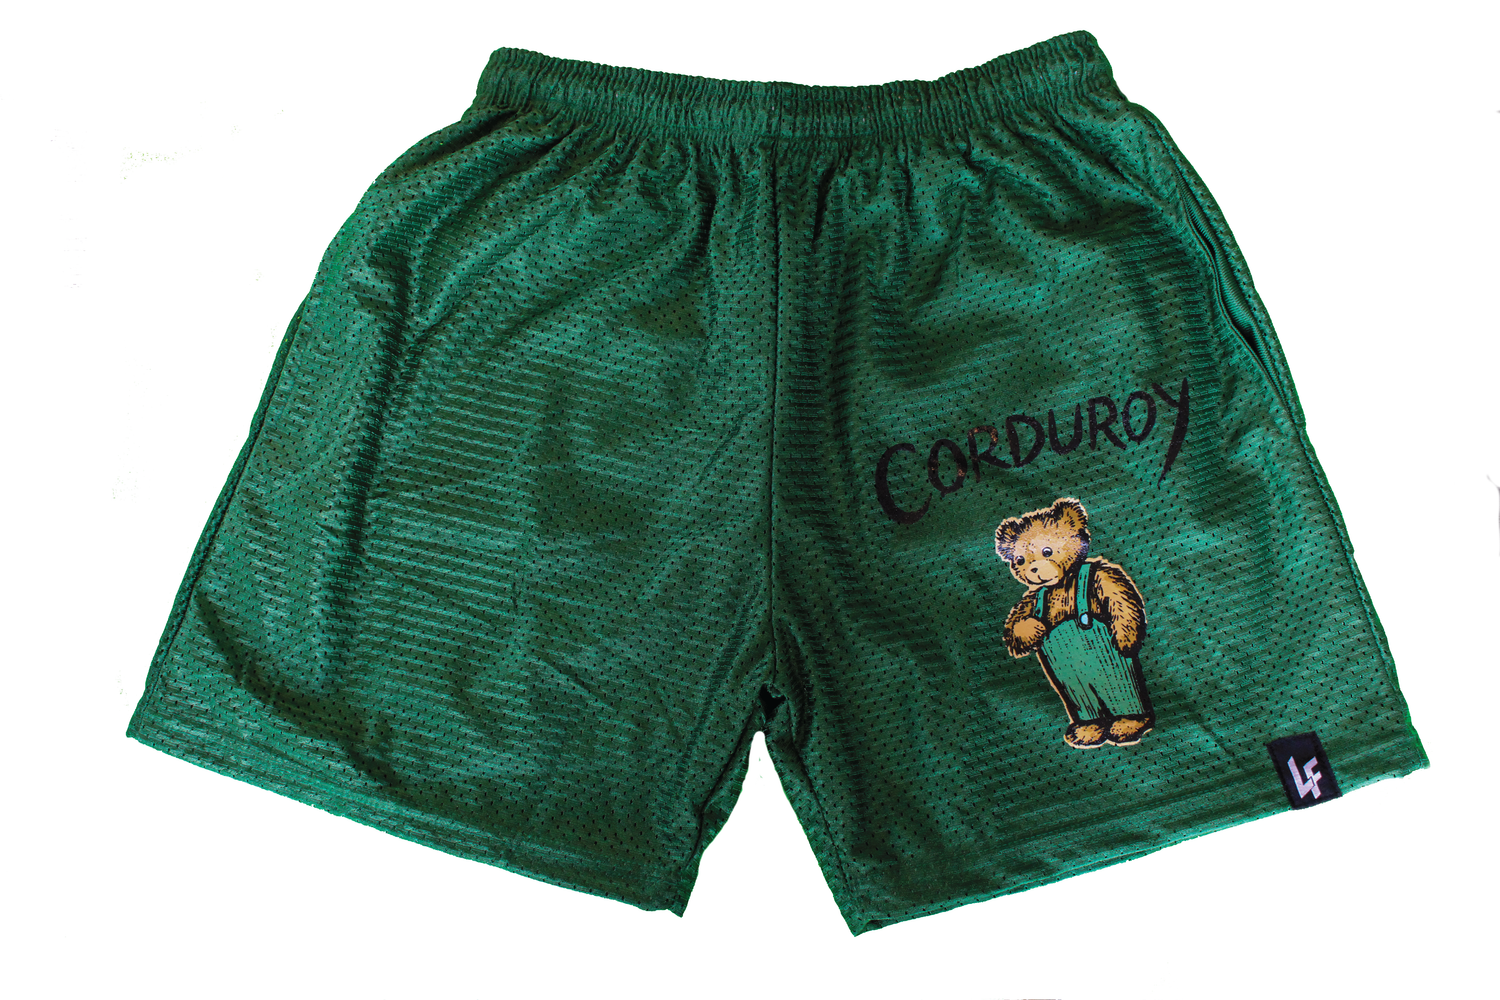 Green Corduroy Shorts